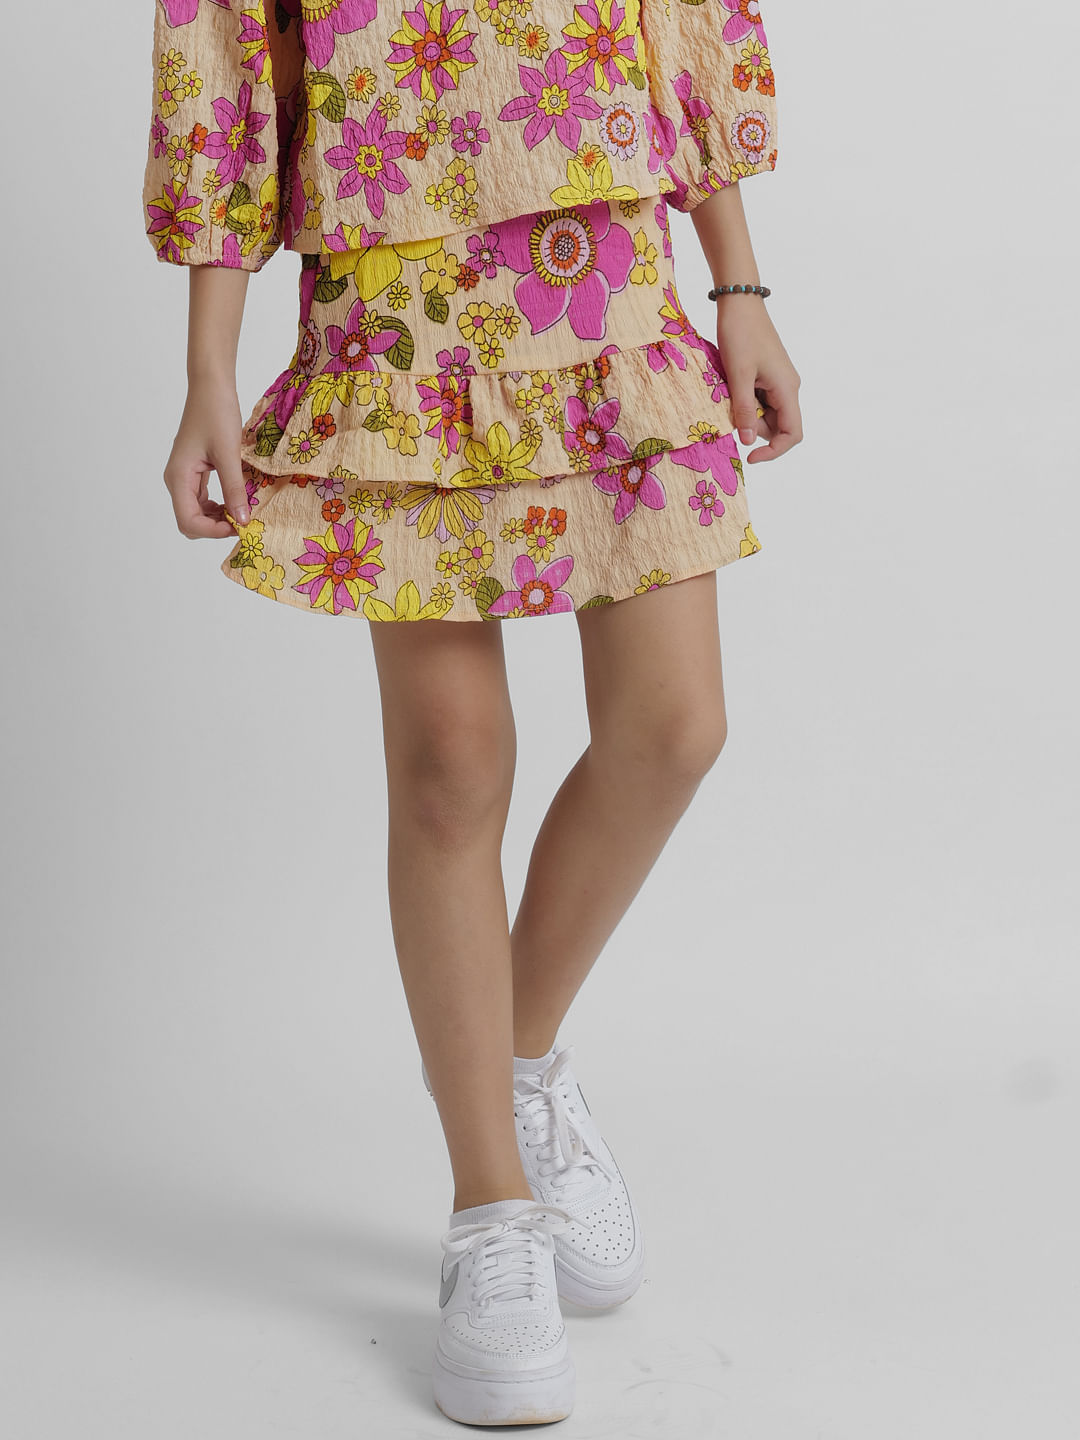 Kids Cotton Skirts For Girls 2020  Net Skirt Design For Girls 2020   Beautiful Kids Skirts Ideas  YouTube